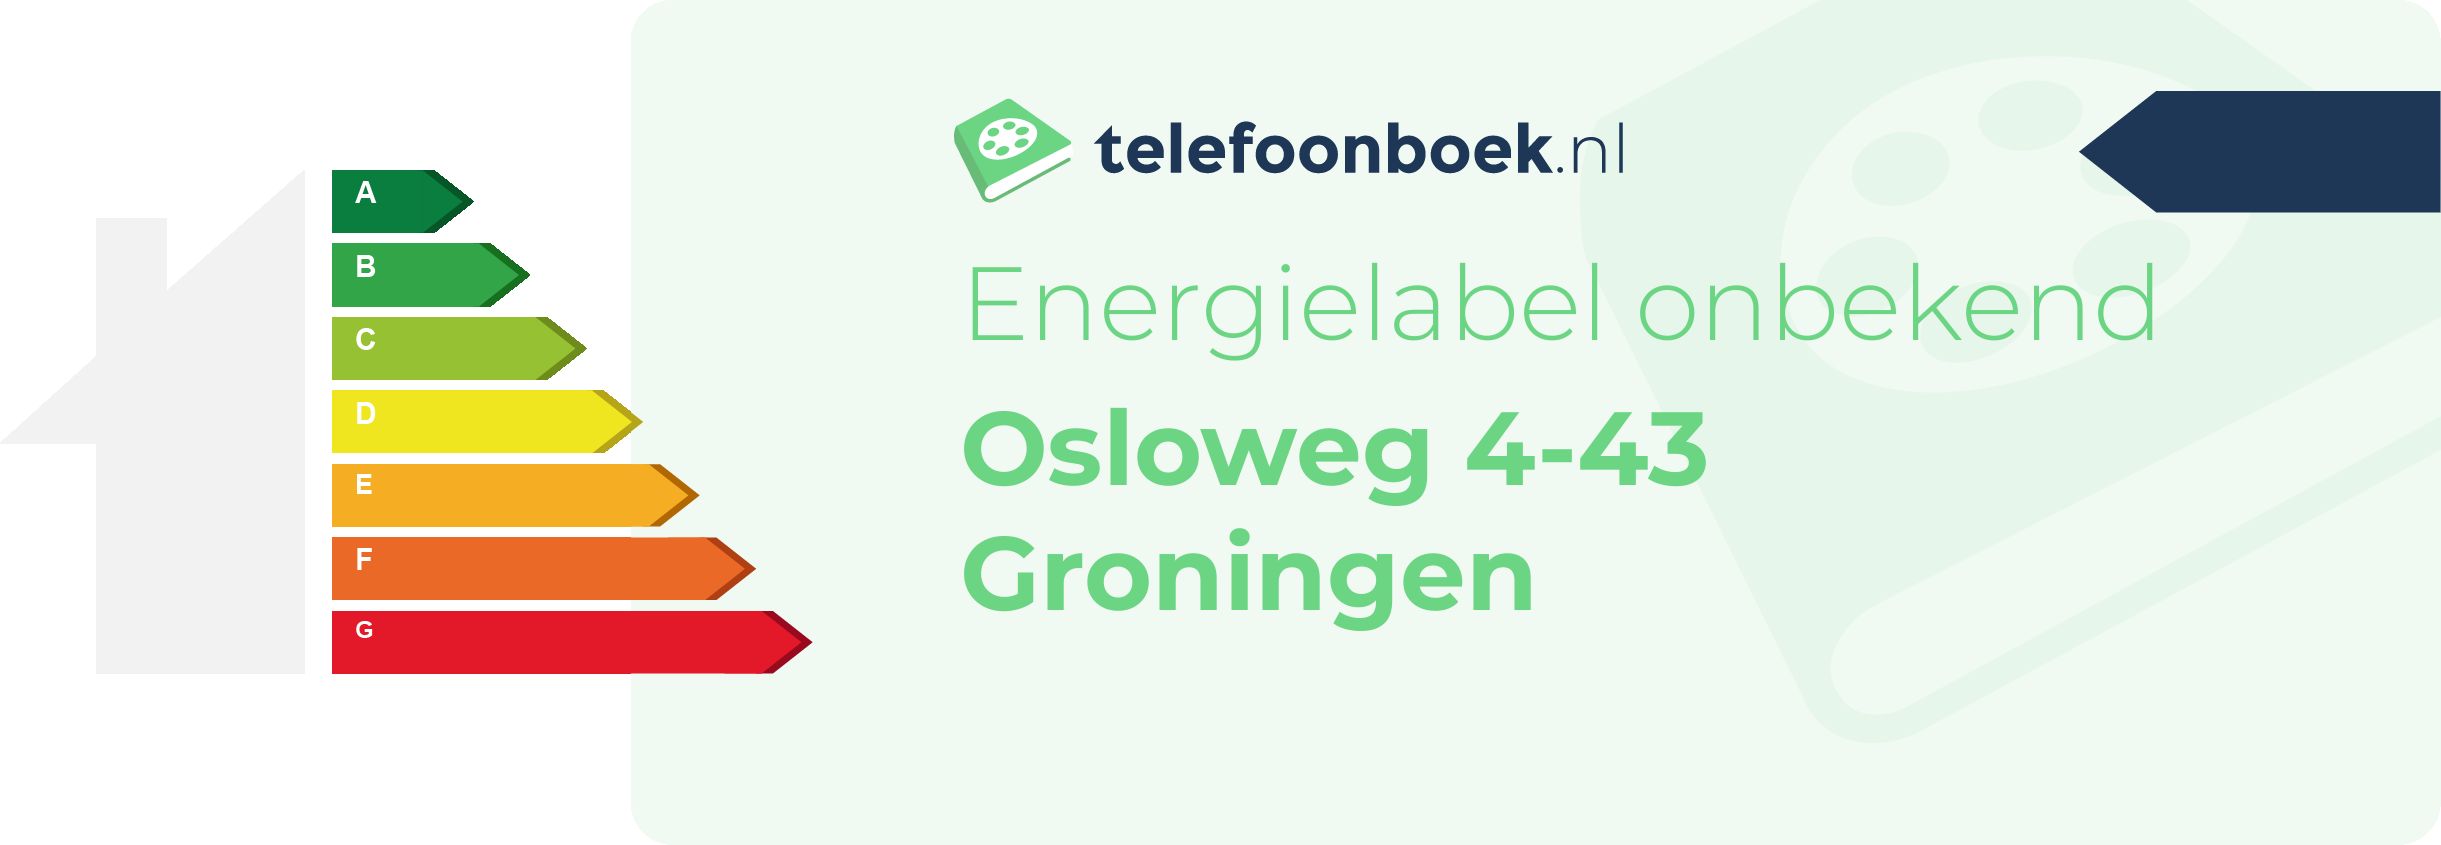 Energielabel Osloweg 4-43 Groningen